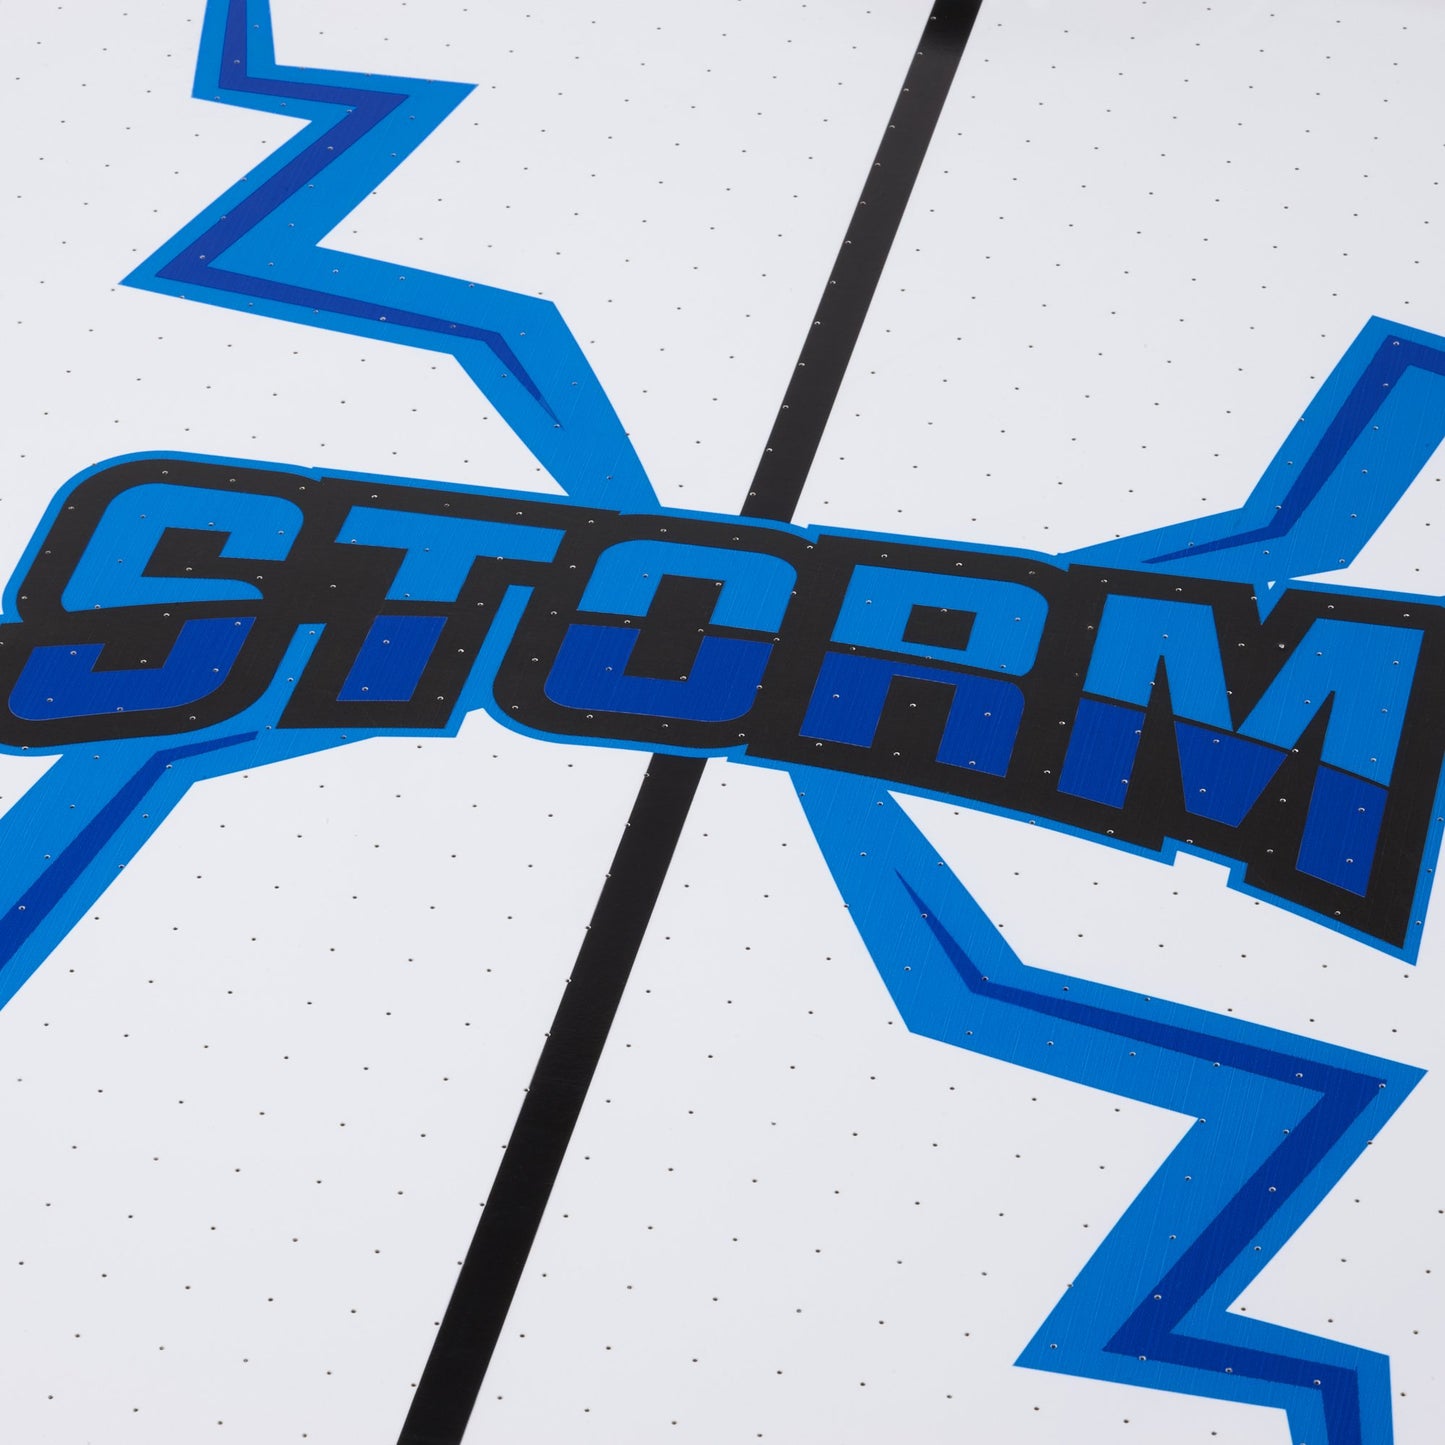 Fat Cat Storm MMXI 7ft Air Hockey Table - Gaming Blaze